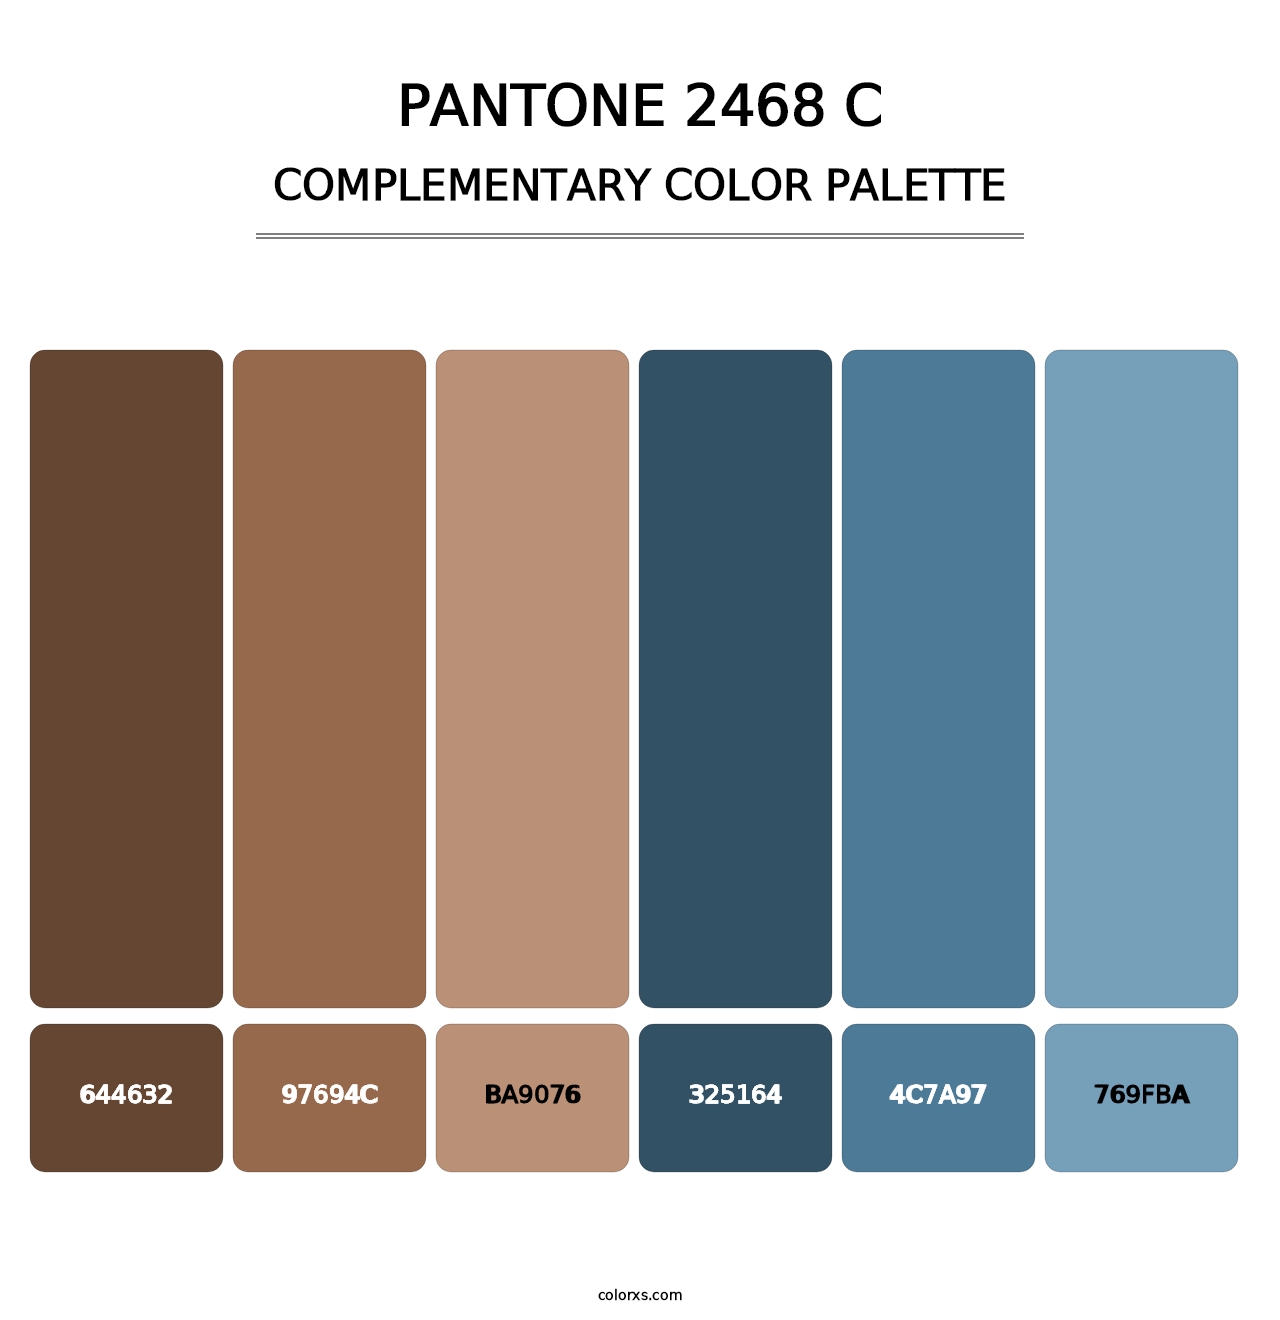 PANTONE 2468 C - Complementary Color Palette